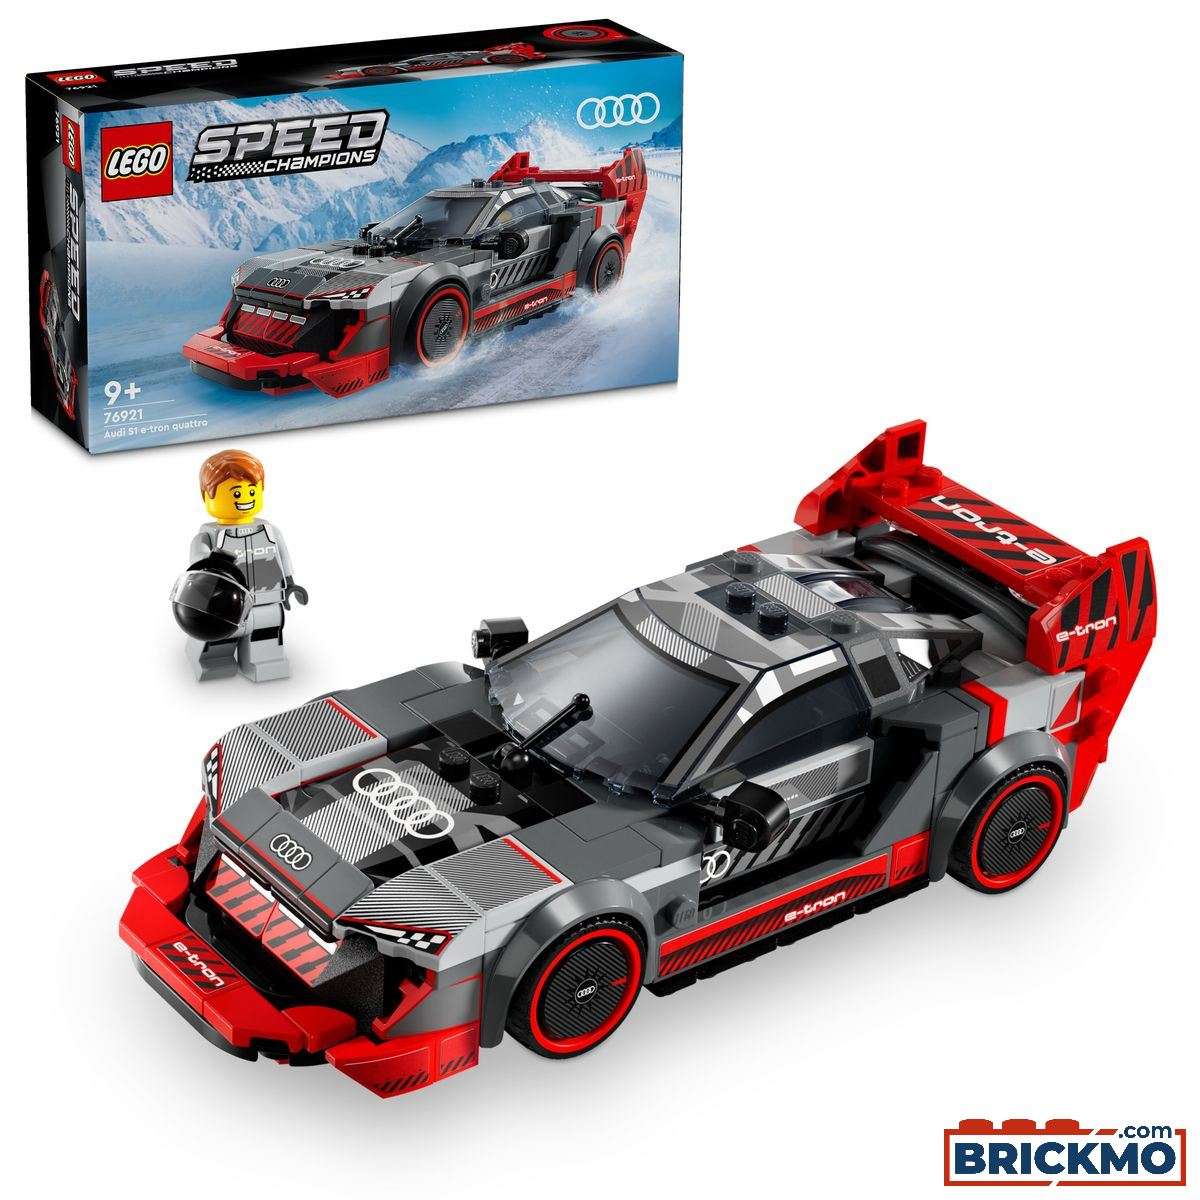 LEGO Speed Champions 76921 Audi S1 e-tron quattro Race Car 76921